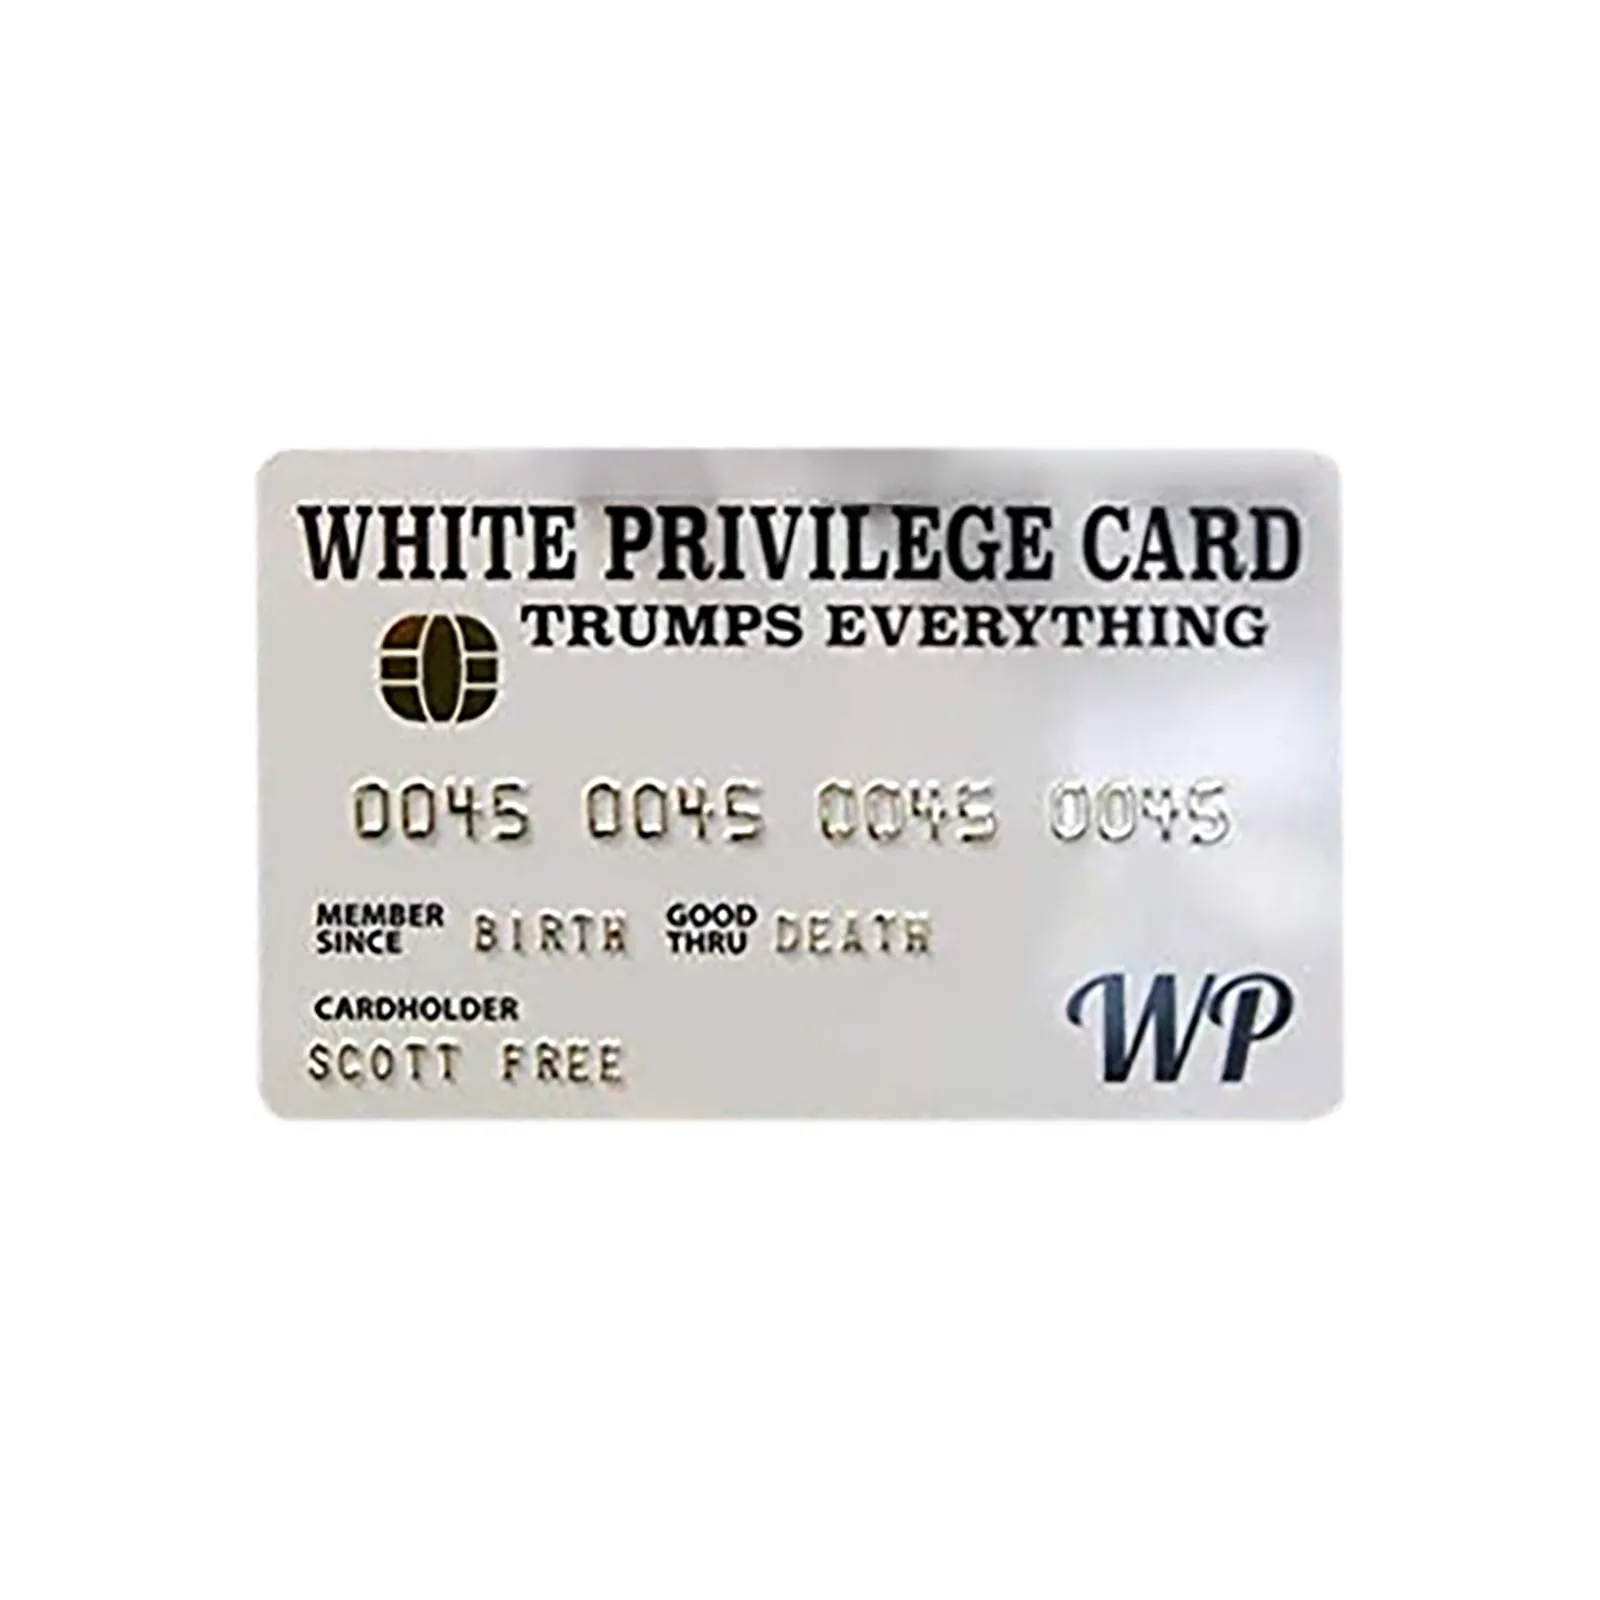 Inspirational Wallet Card Gifts Decal Card Anti Democrat Deposit White Privilege Deplorable Decal Anniversary Card PVC material status Longgaohui White privilege card Trumps Everything